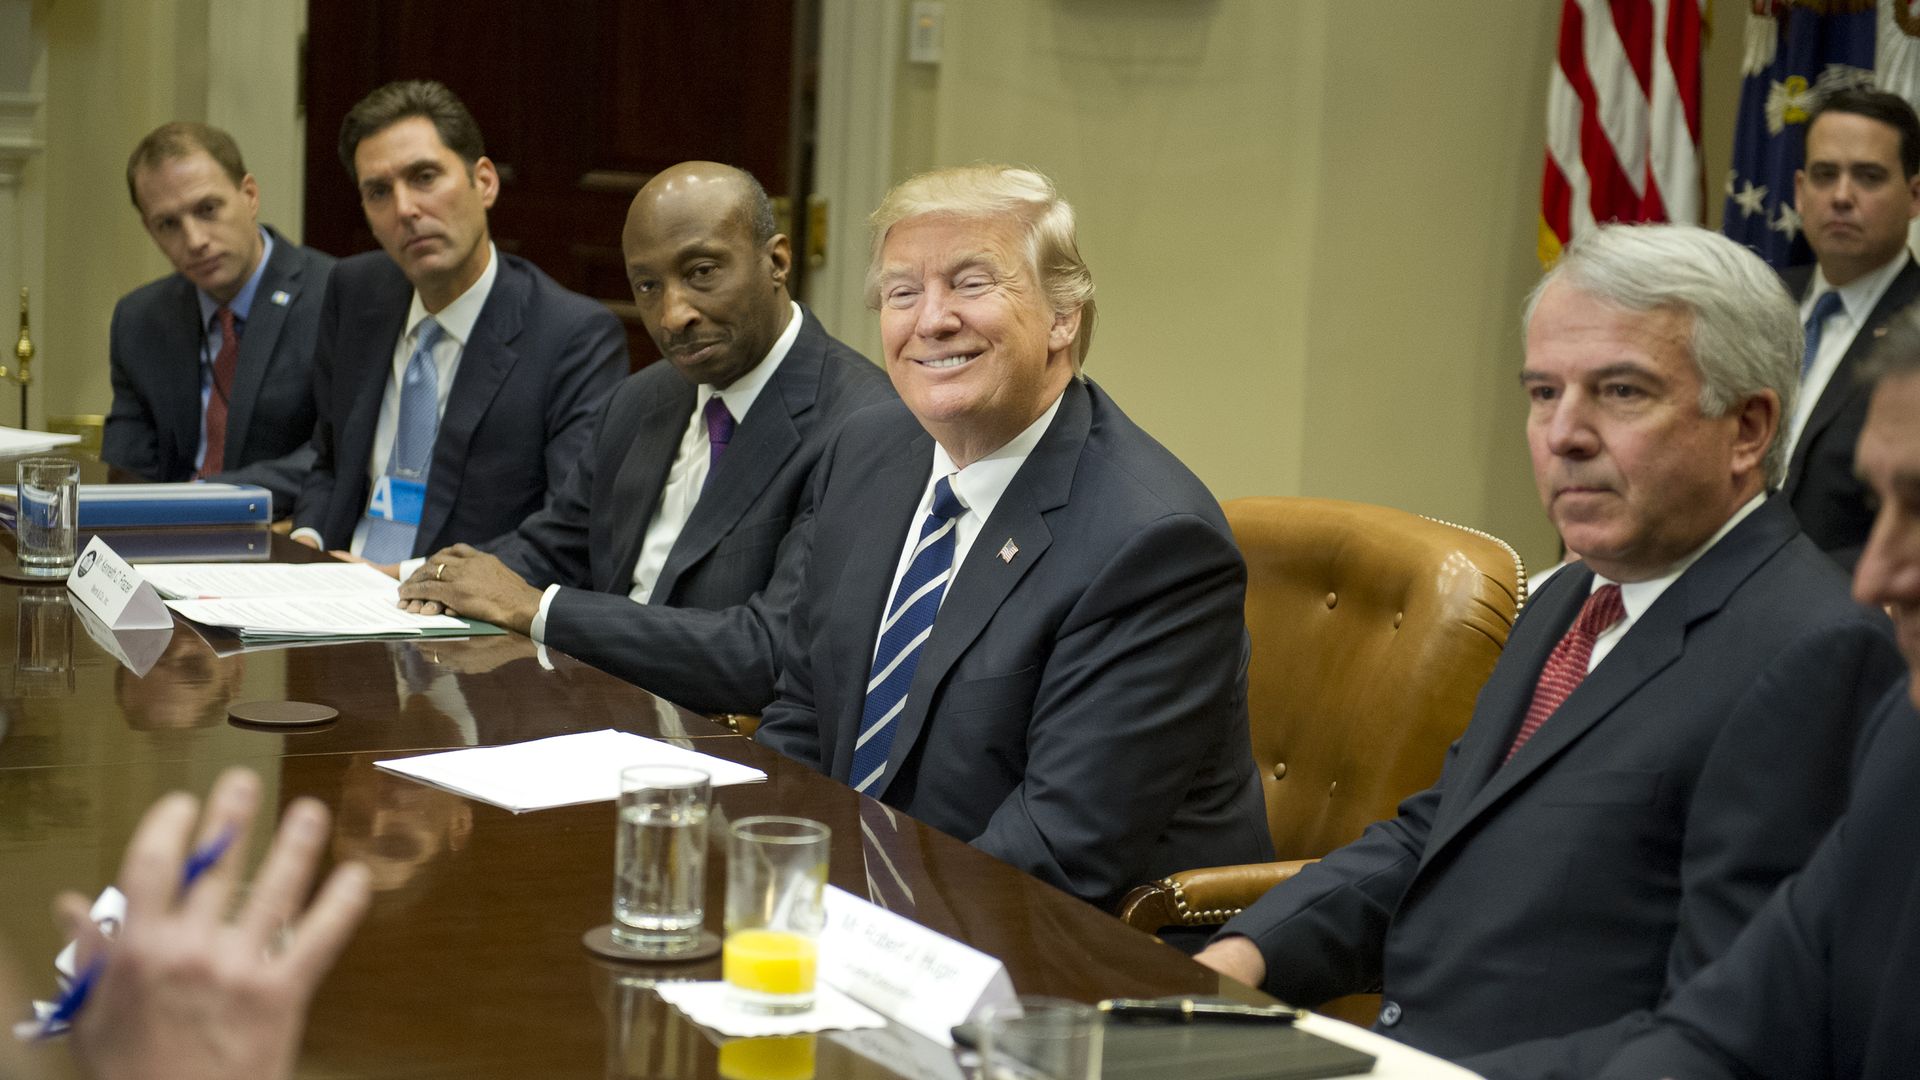 President Trump with representatives of PhRMA